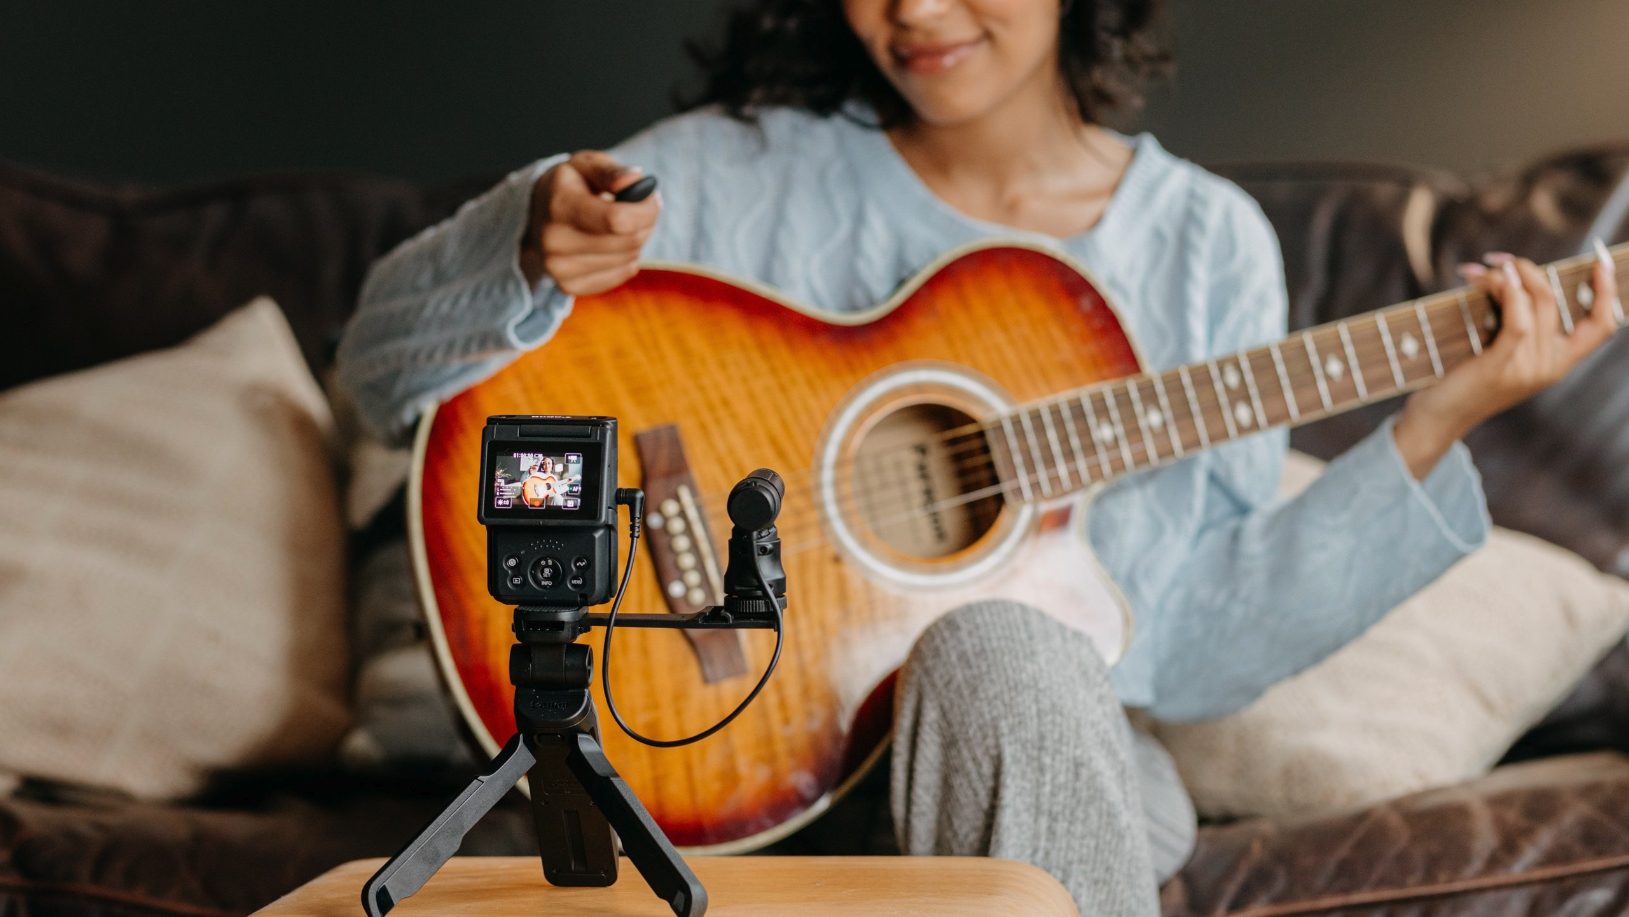 Canon Powershot V10 vlogging camera filming a guitarist